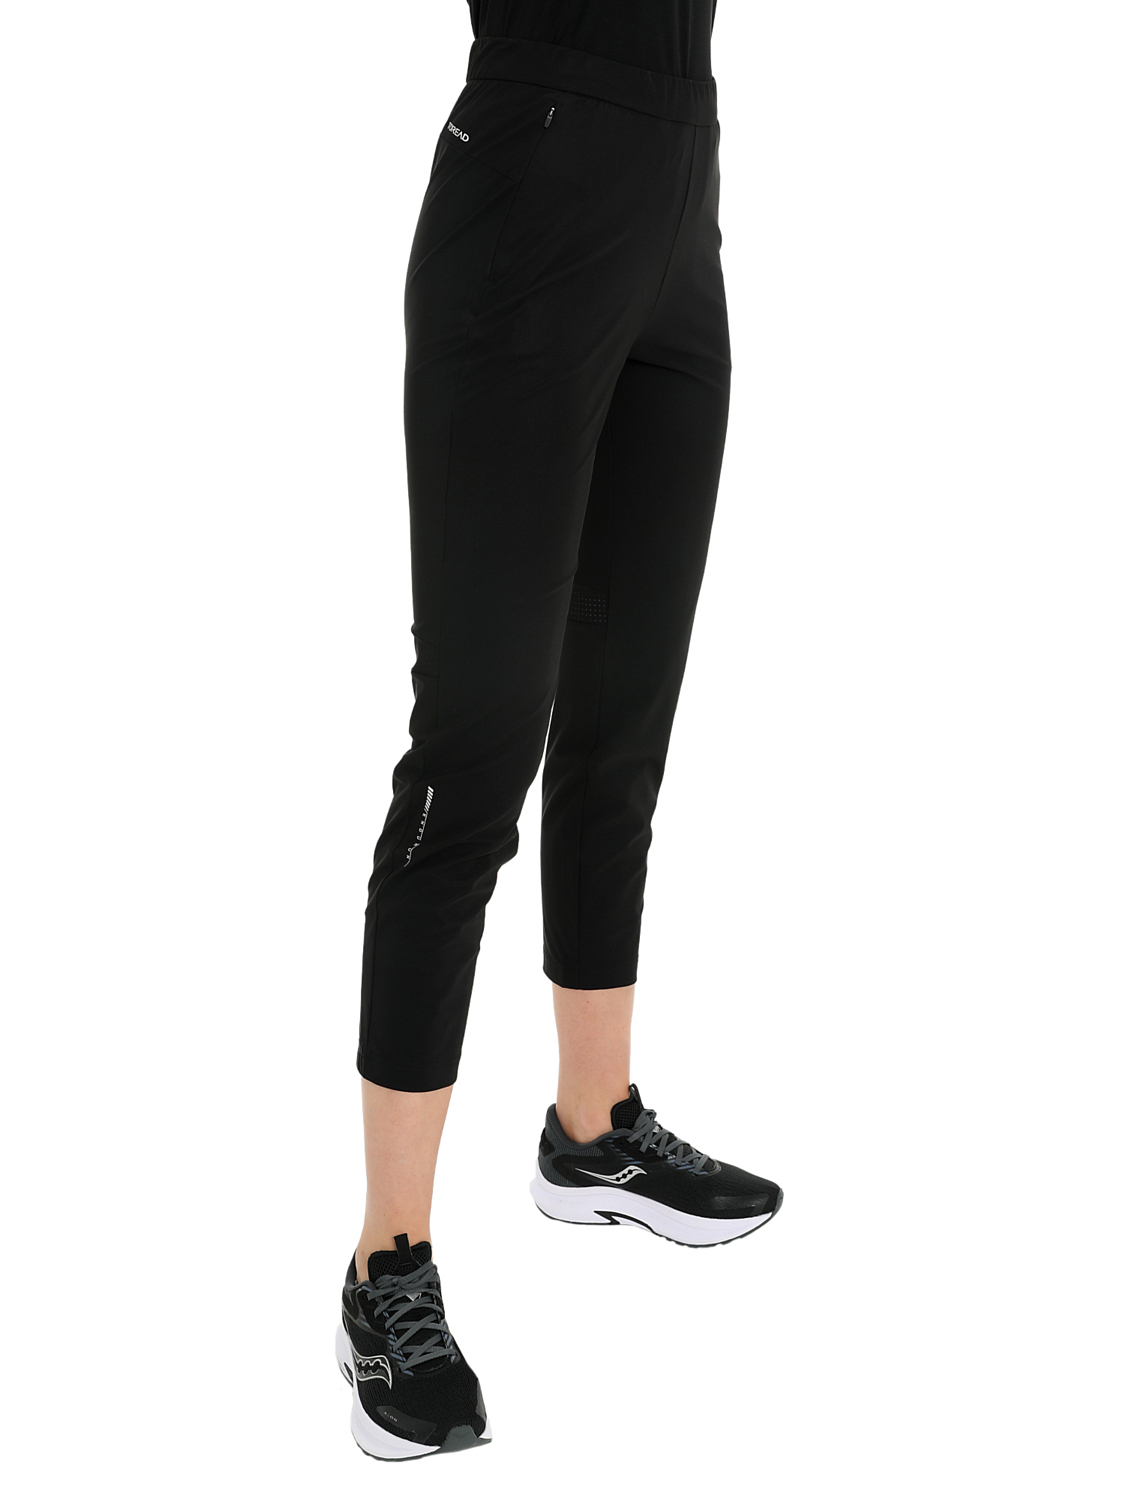 Брюки беговые Toread Women's running training pants Black